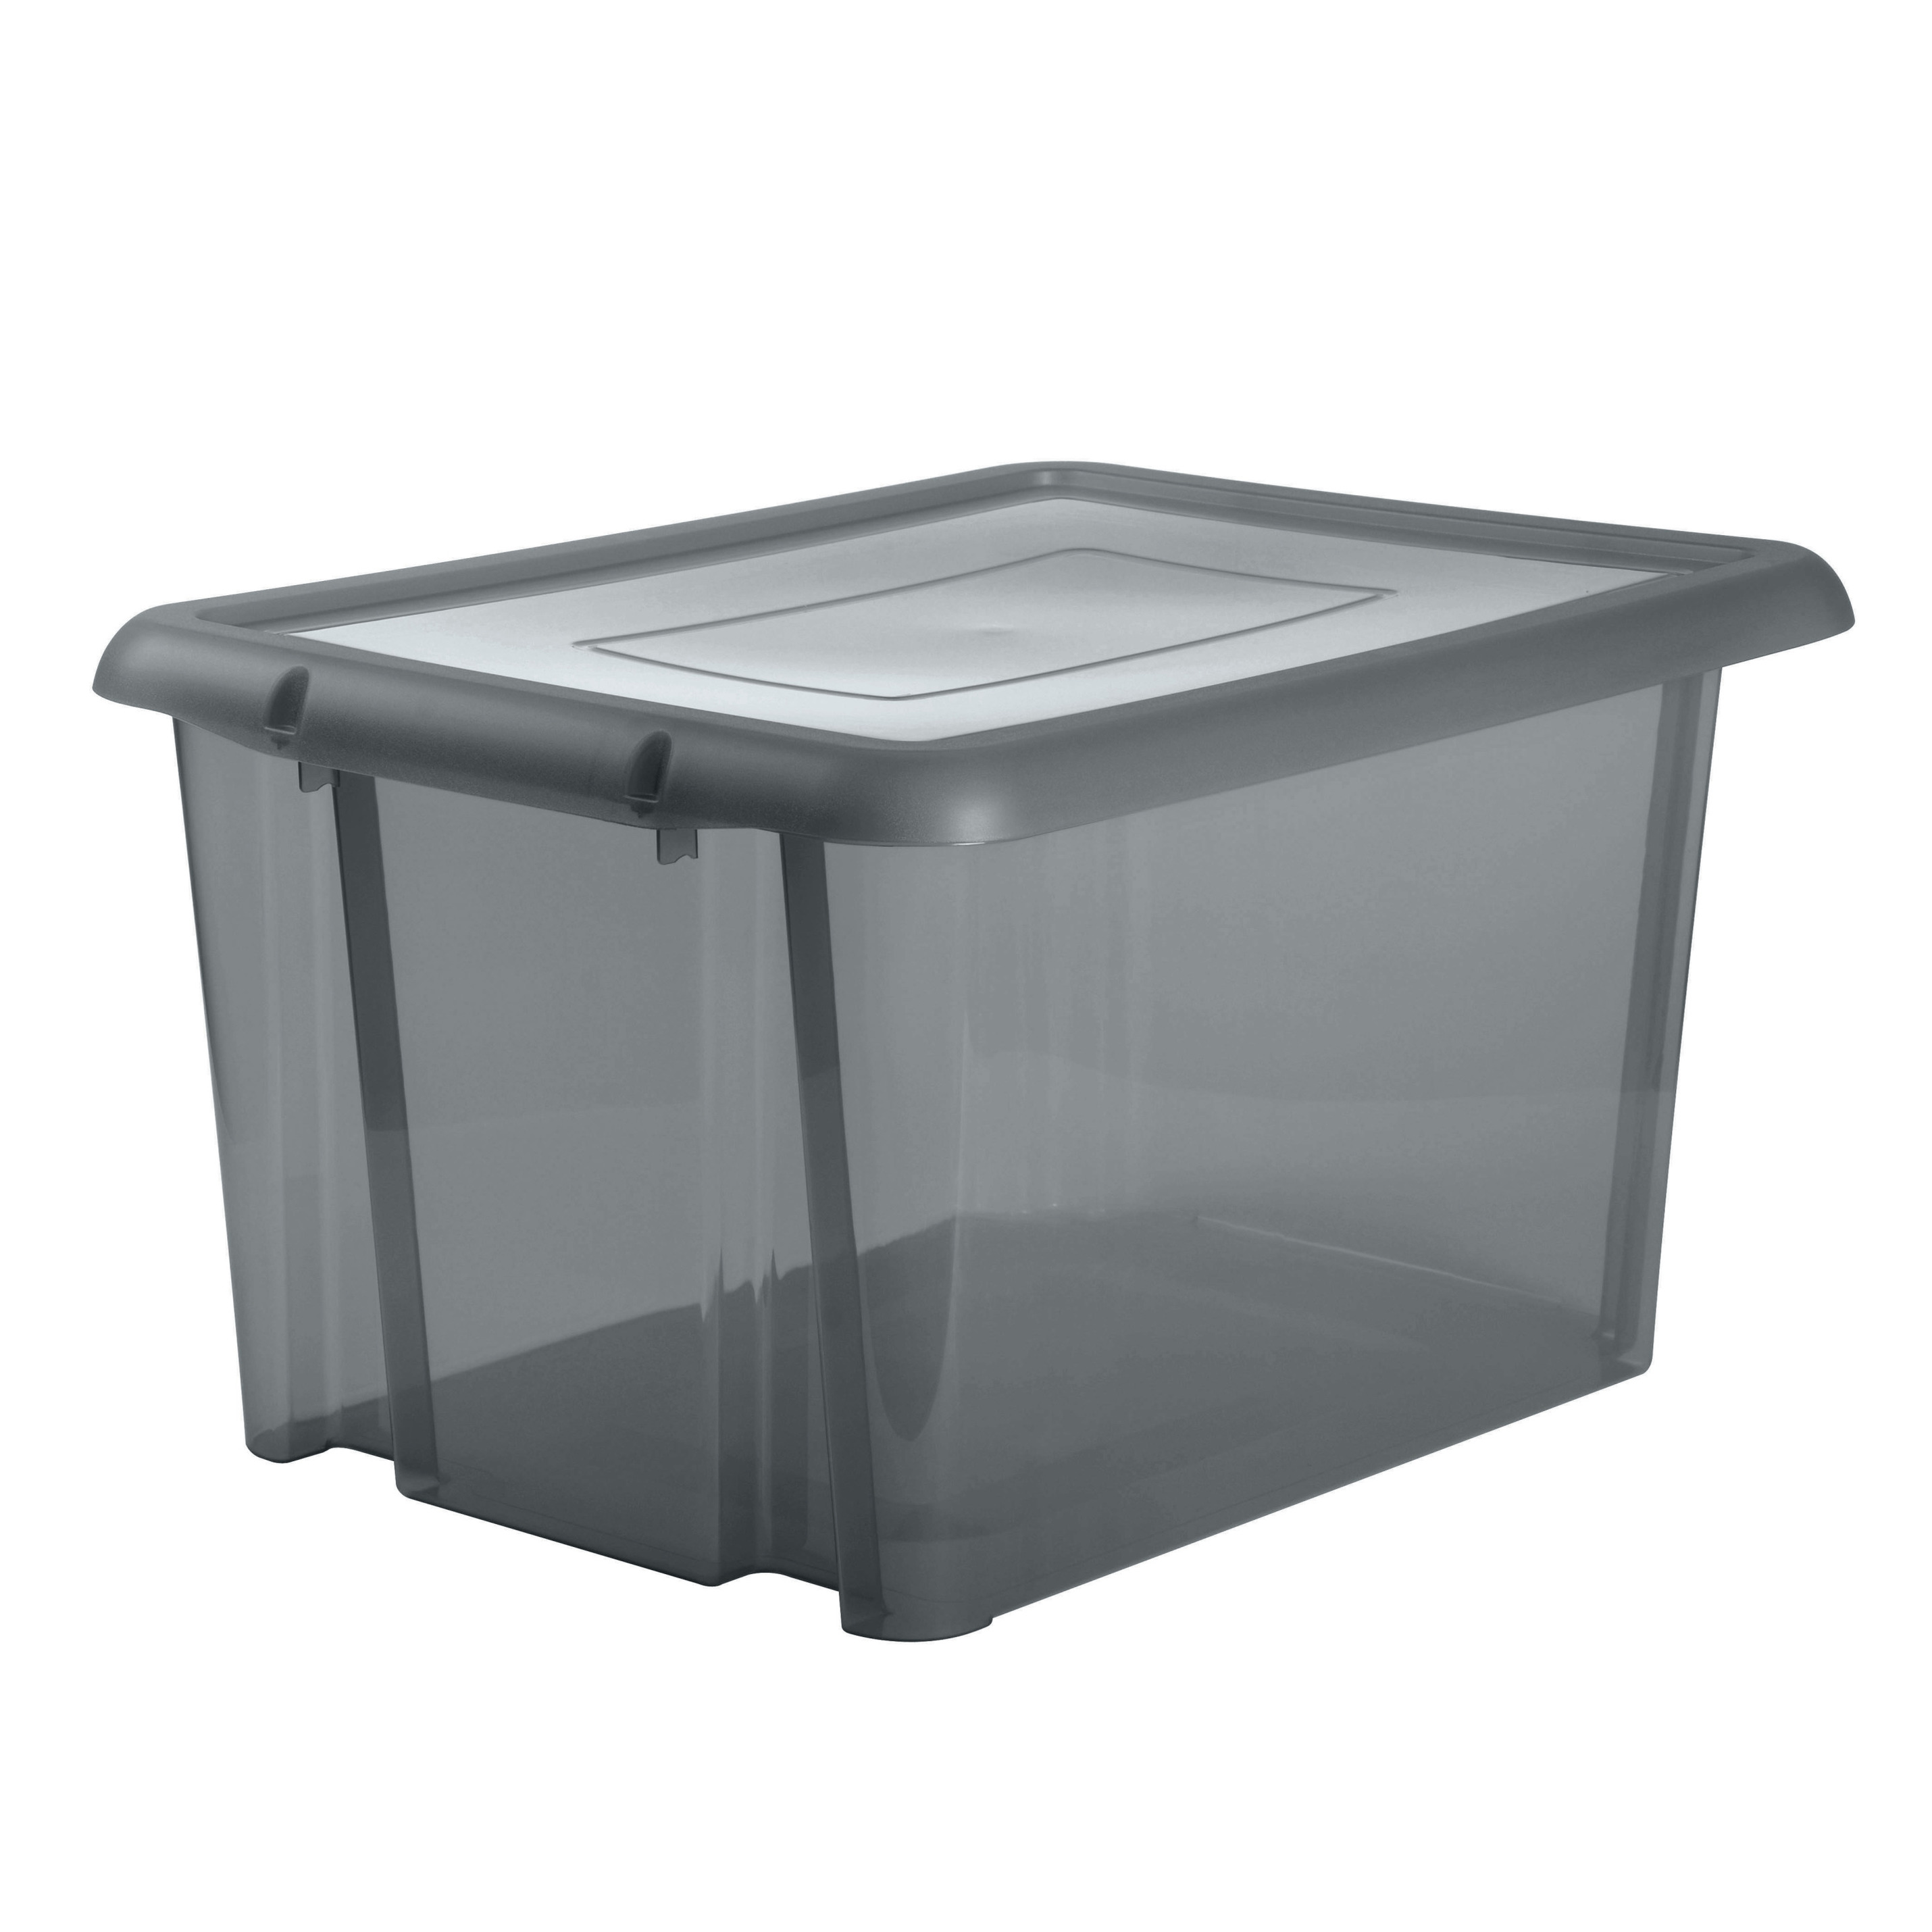 Kunststof opbergbox-opbergdoos grijs transparant L65 x B50 x H36 cm stapelbaar